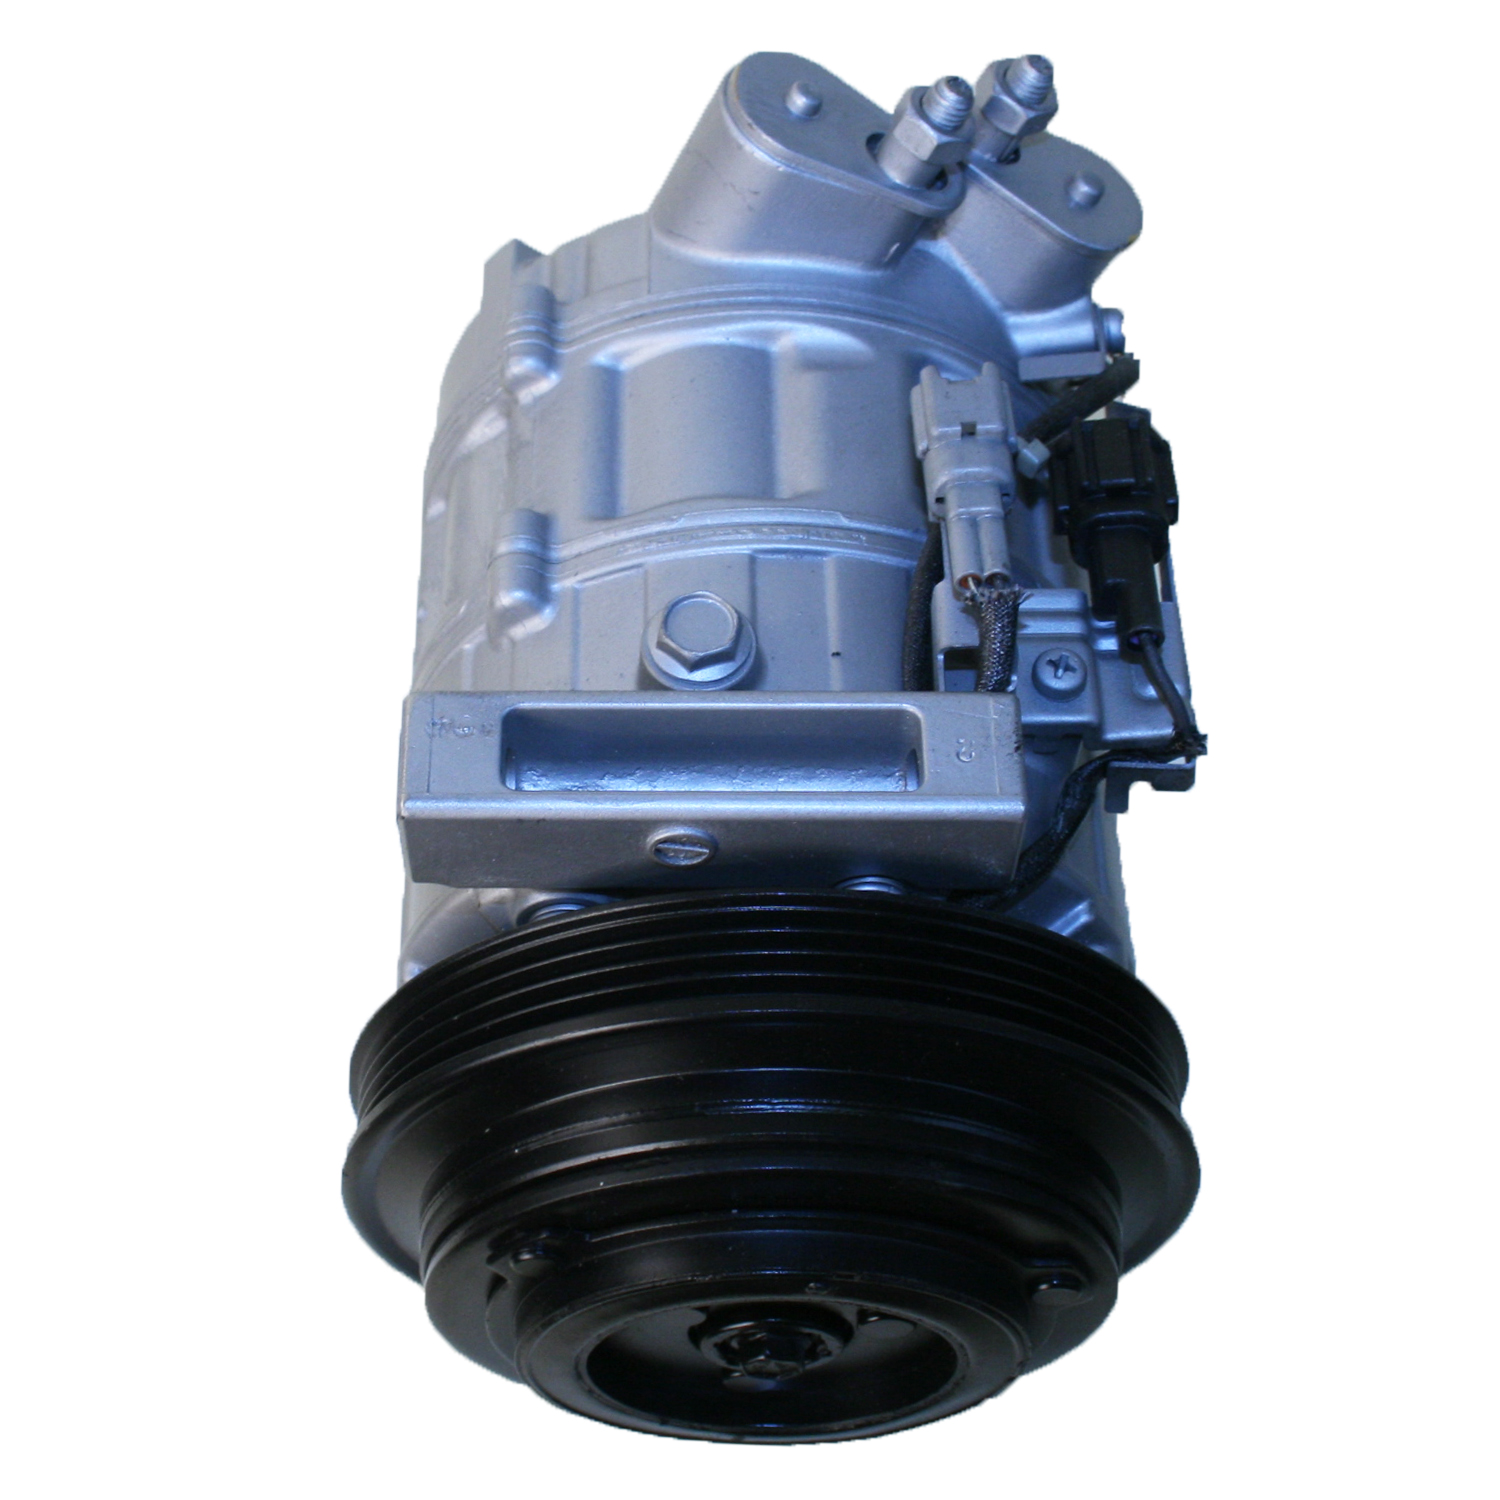 TCW Compressor 12585.4T1 Remanufactured Product Image field_60b6a13a6e67c